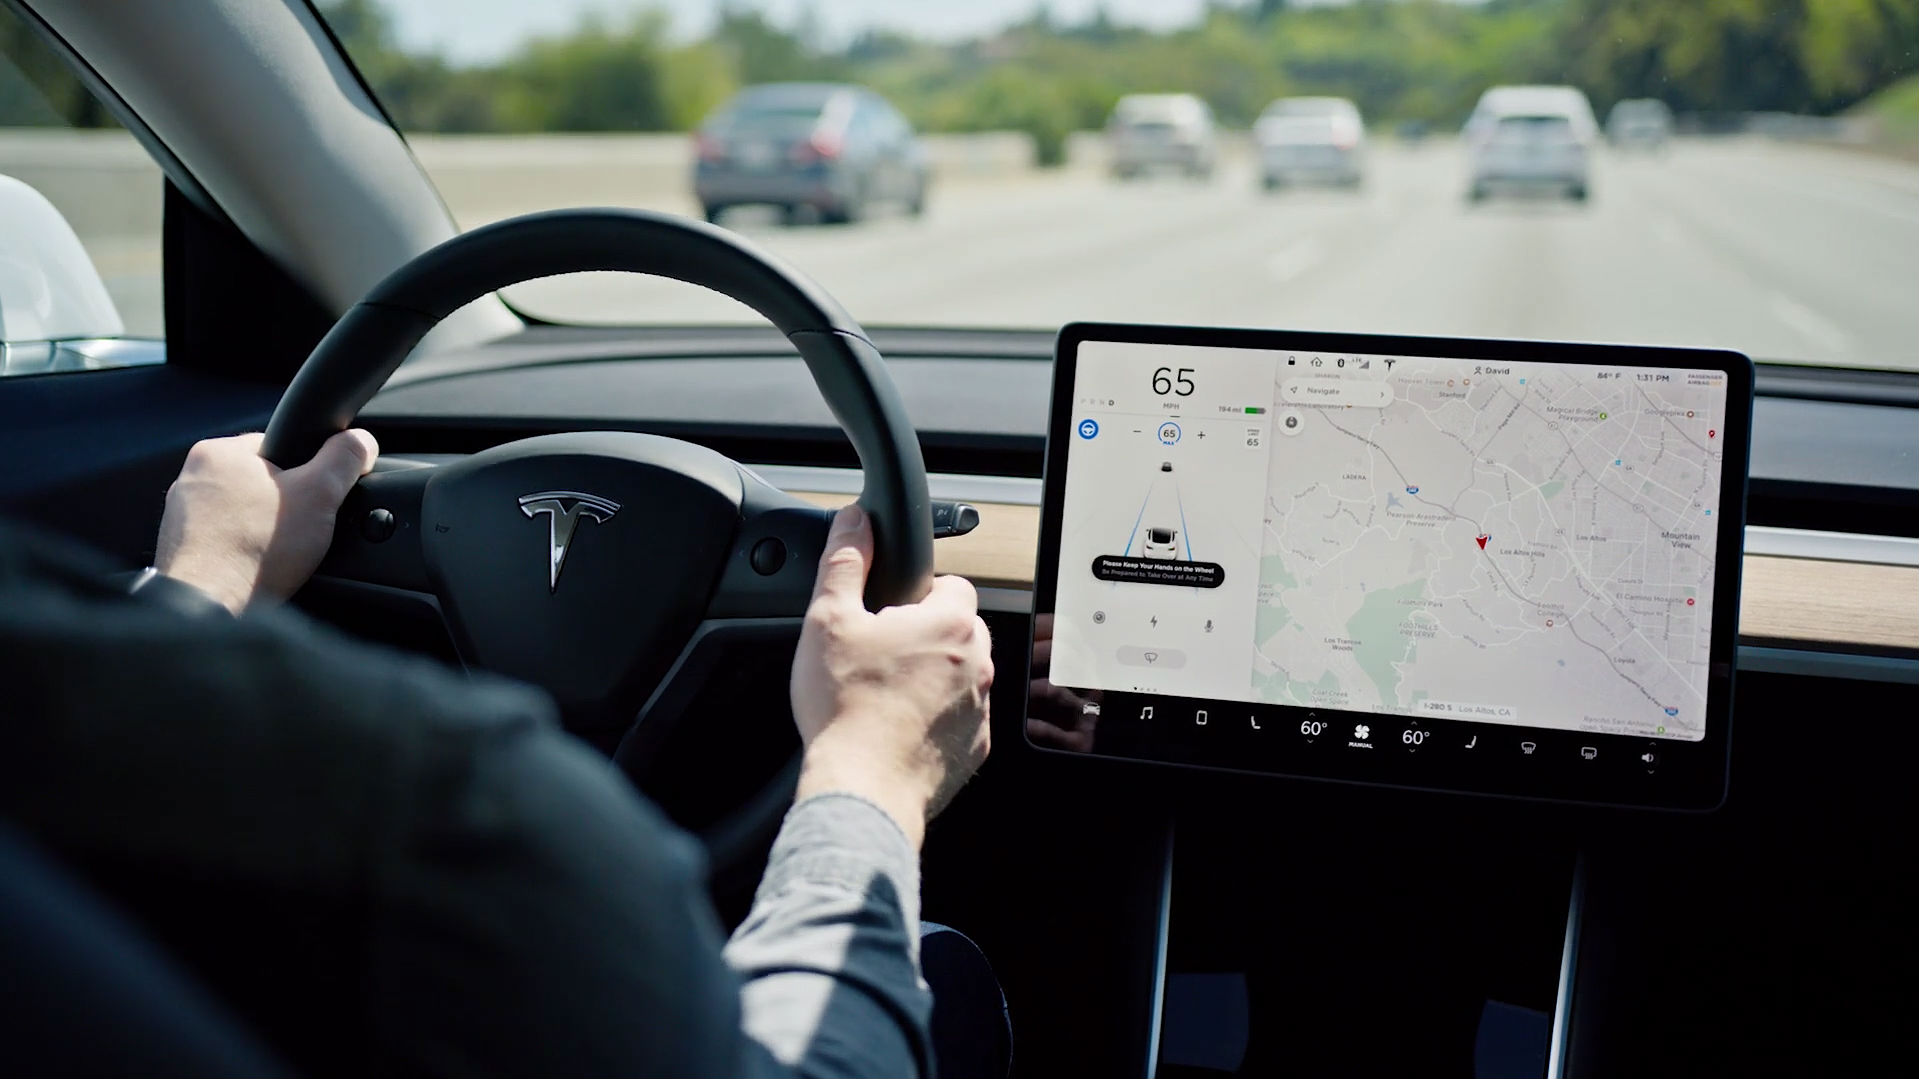 Tesla driver caught cheating license exam using Autopilot